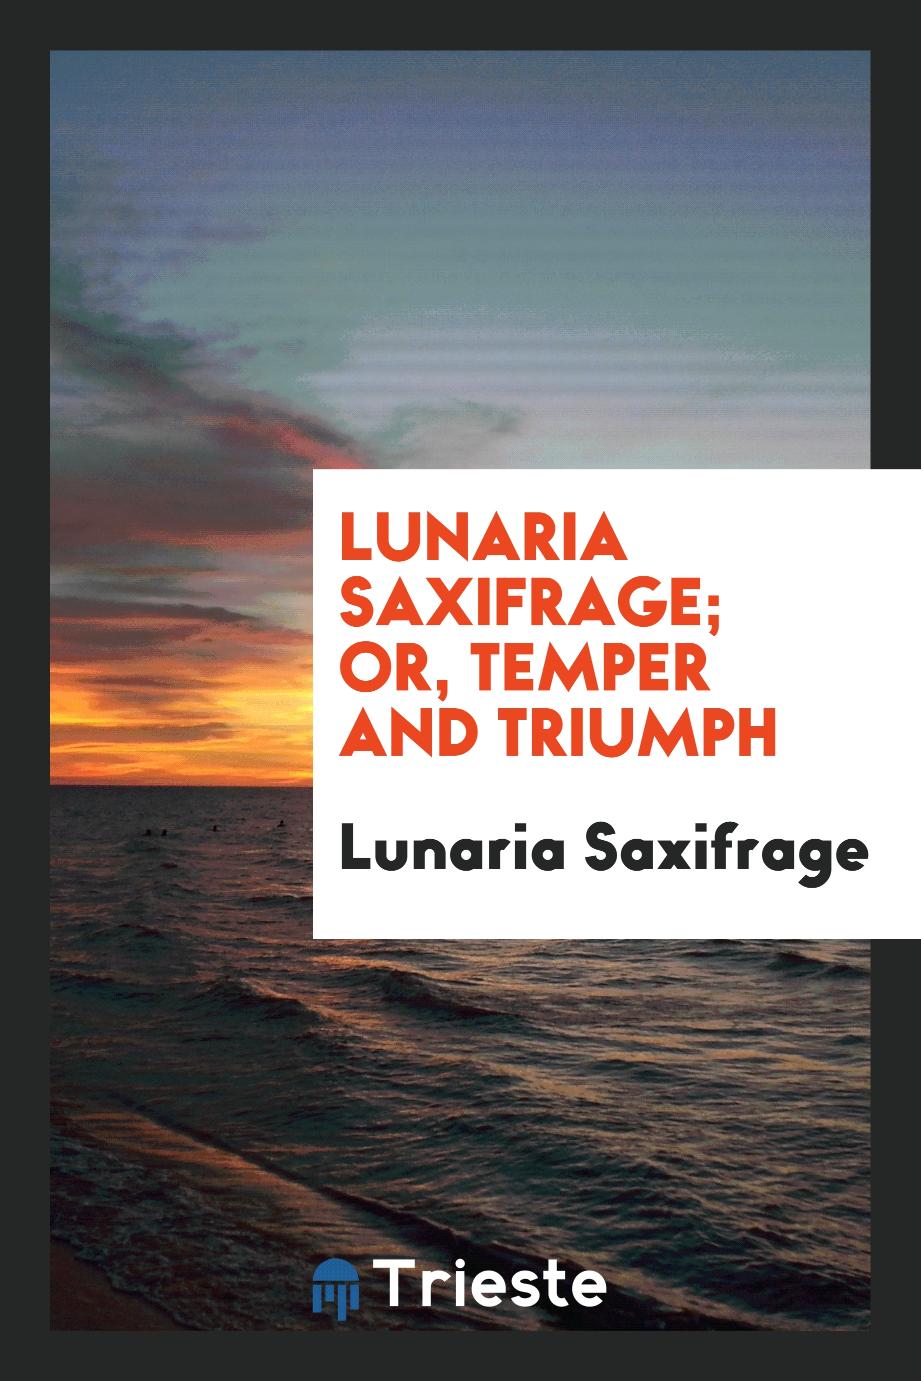 Lunaria Saxifrage; or, Temper and triumph